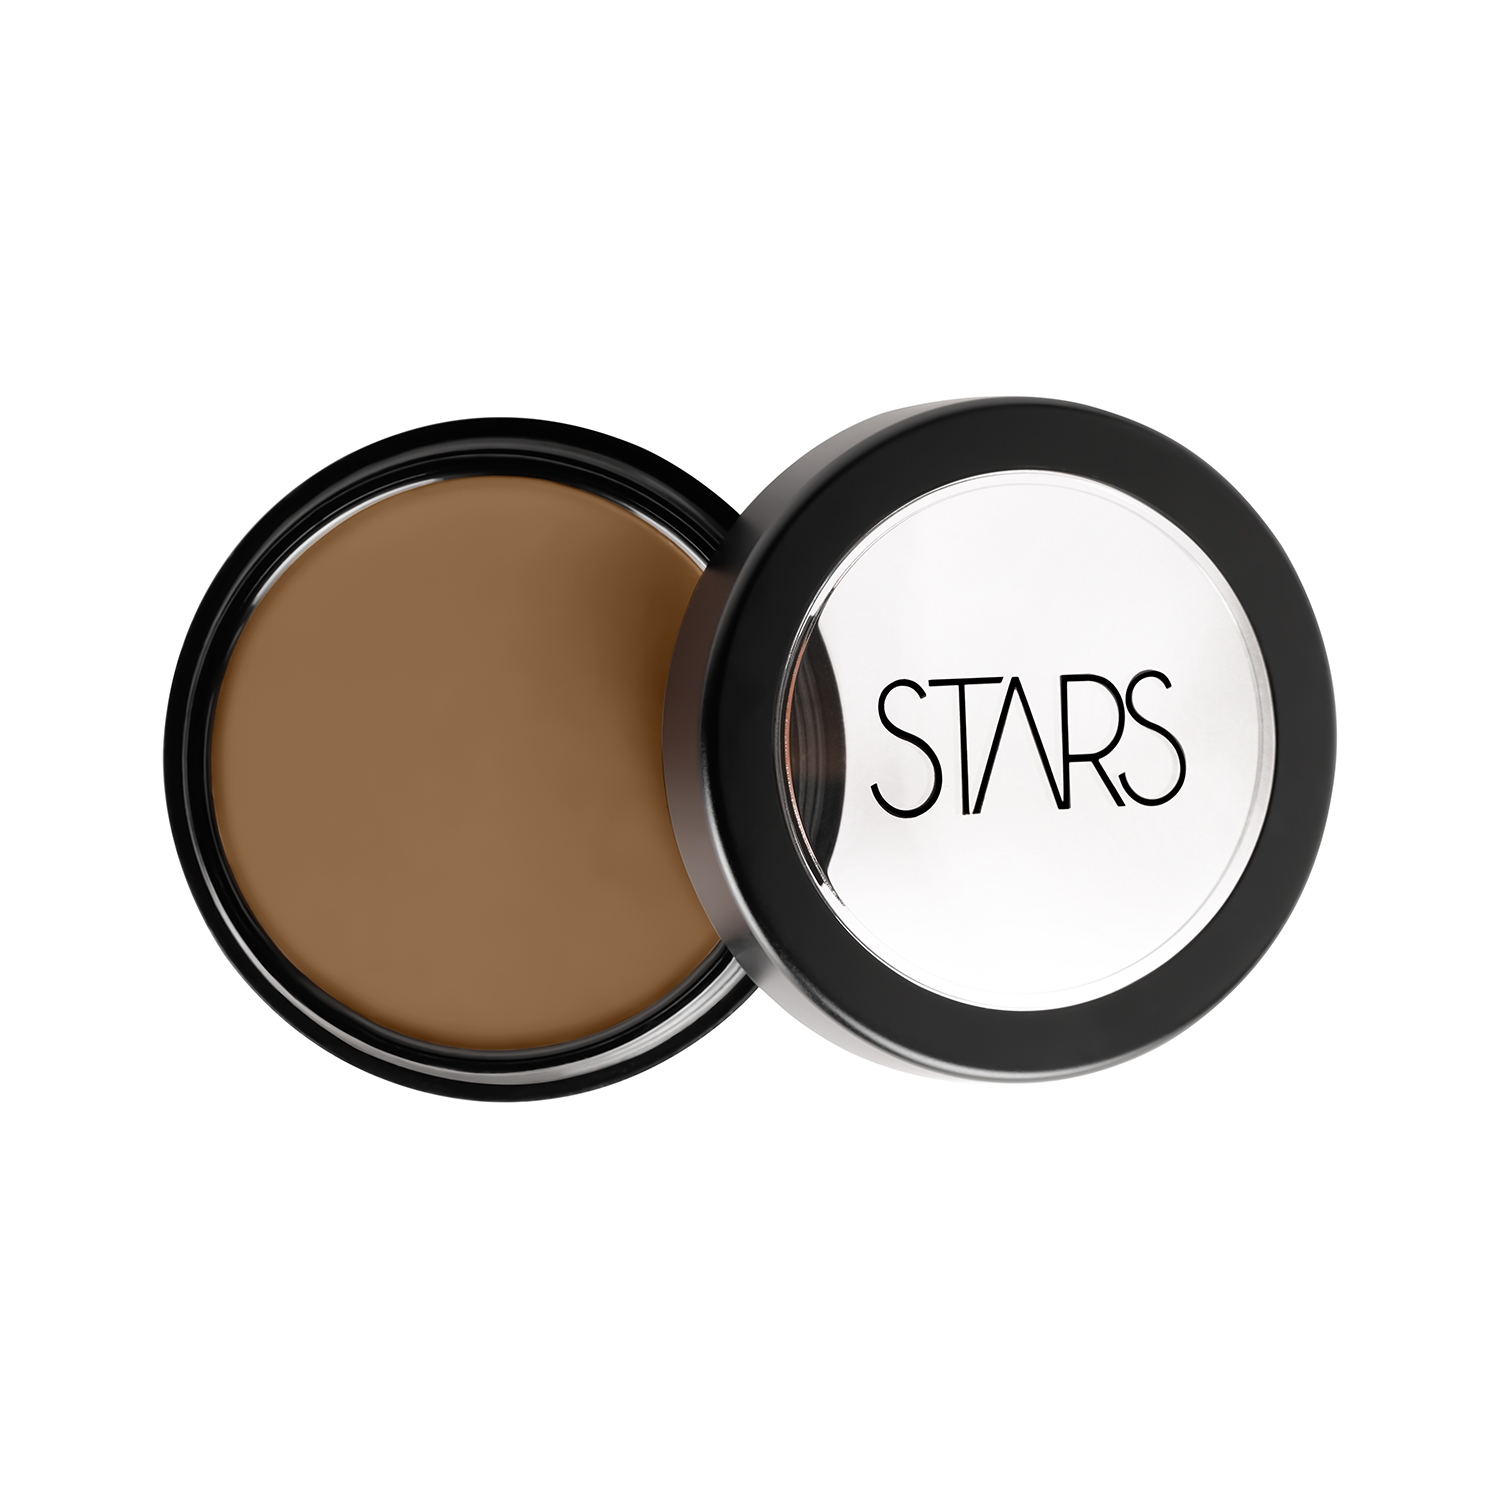 Stars Cosmetics | Stars Cosmetics Derma Make Up Powder Foundation - Face Makeup - DJ4 (8g)